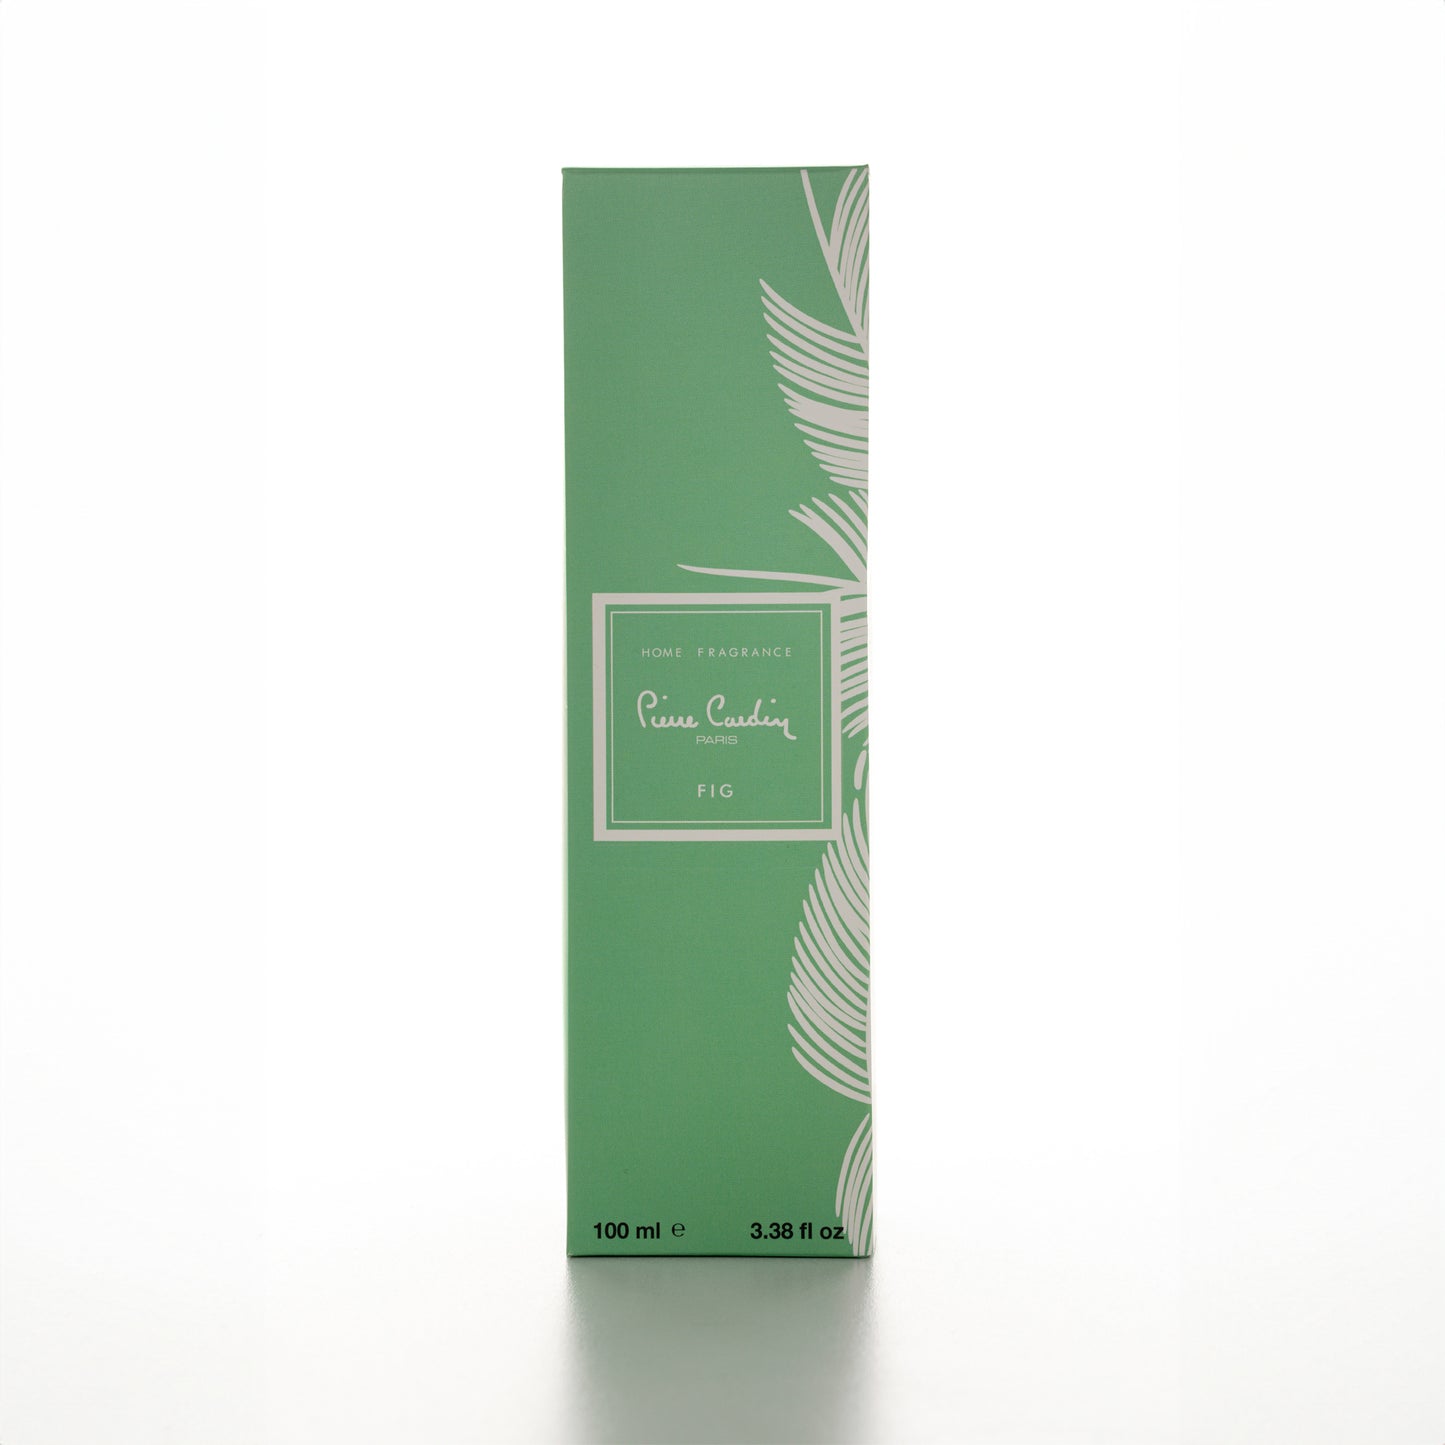 Pierre Cardin Home Fragrance - FIG 100 ml